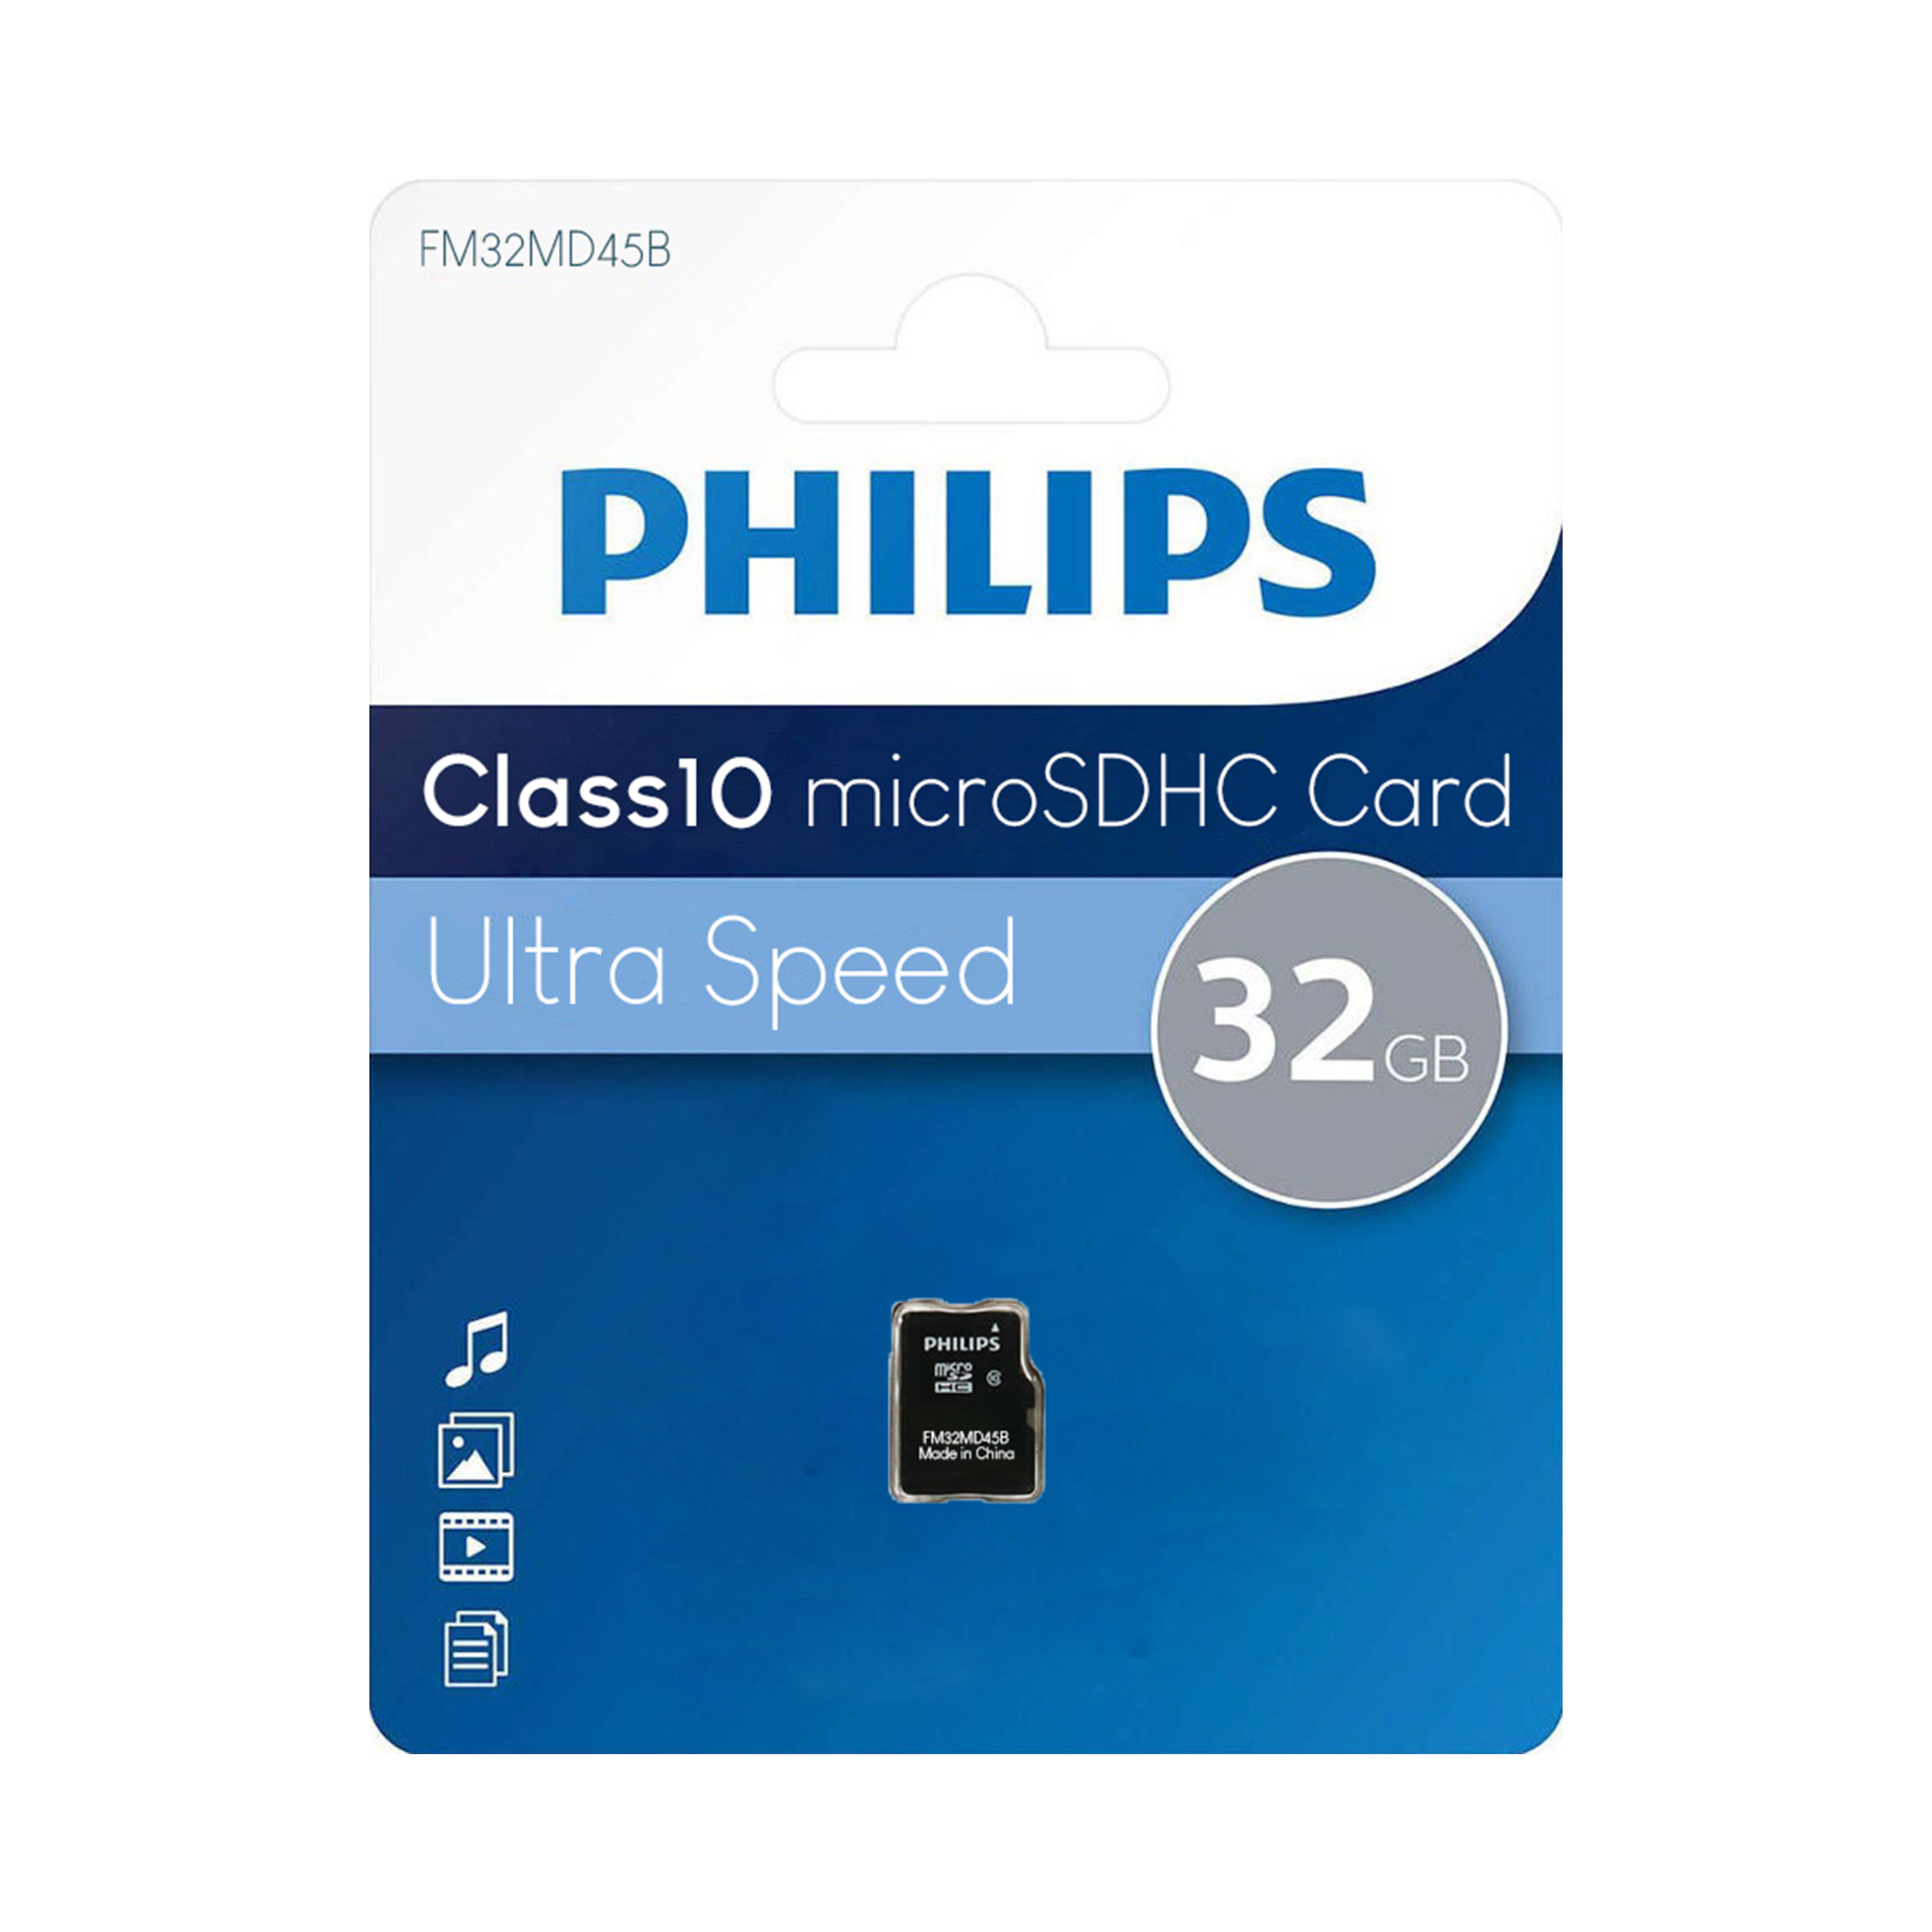 Philips Micro SD-CARD 32Go Class 10 PHMSDMA32GBH - Ultra speed